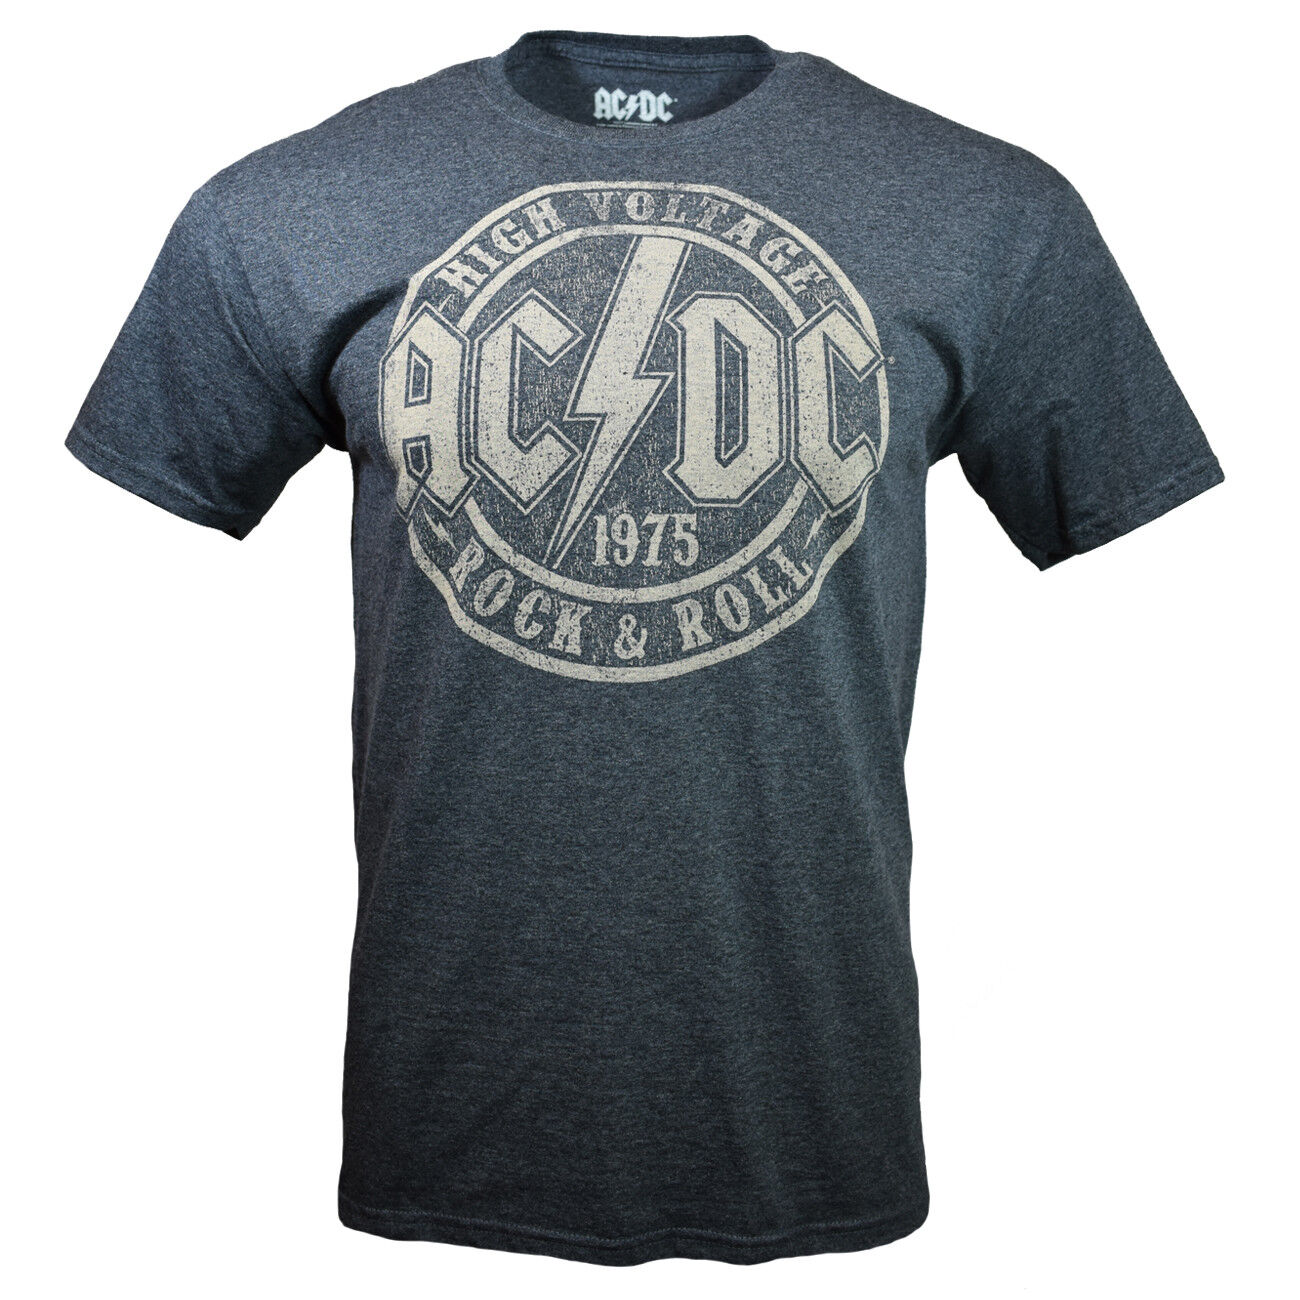 Mens AC/DC 1975 High Voltage Rock & Roll Album Vintage Look T Shirt, Gray